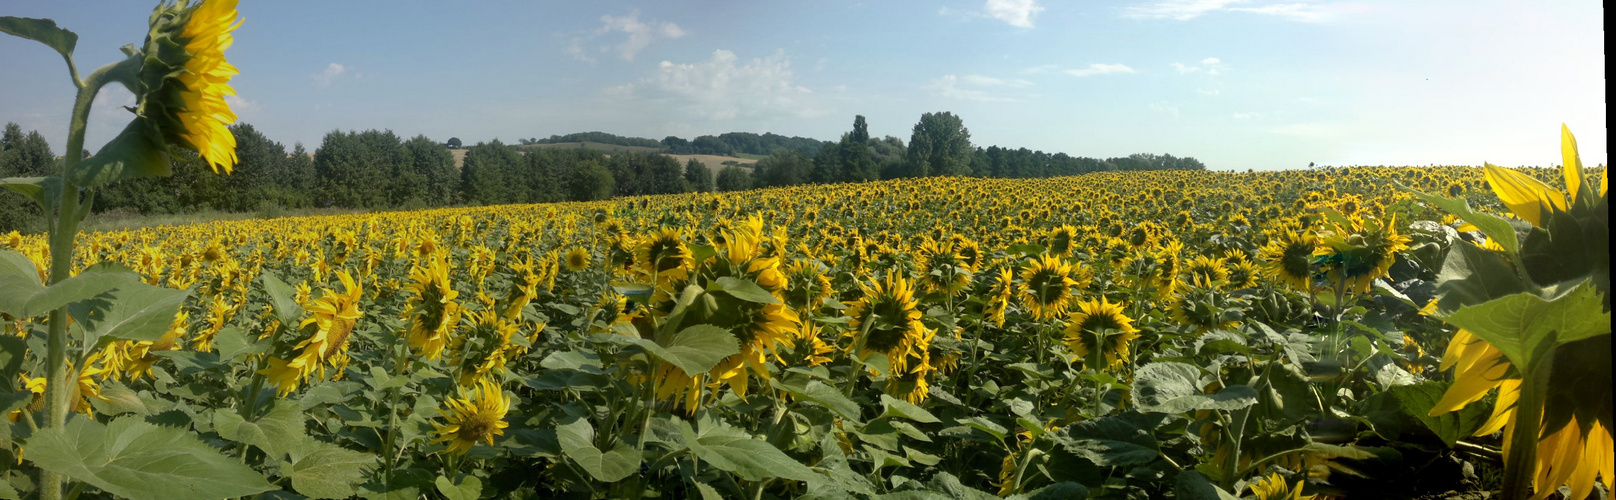 Sonnenblumenfelder in Lothringen